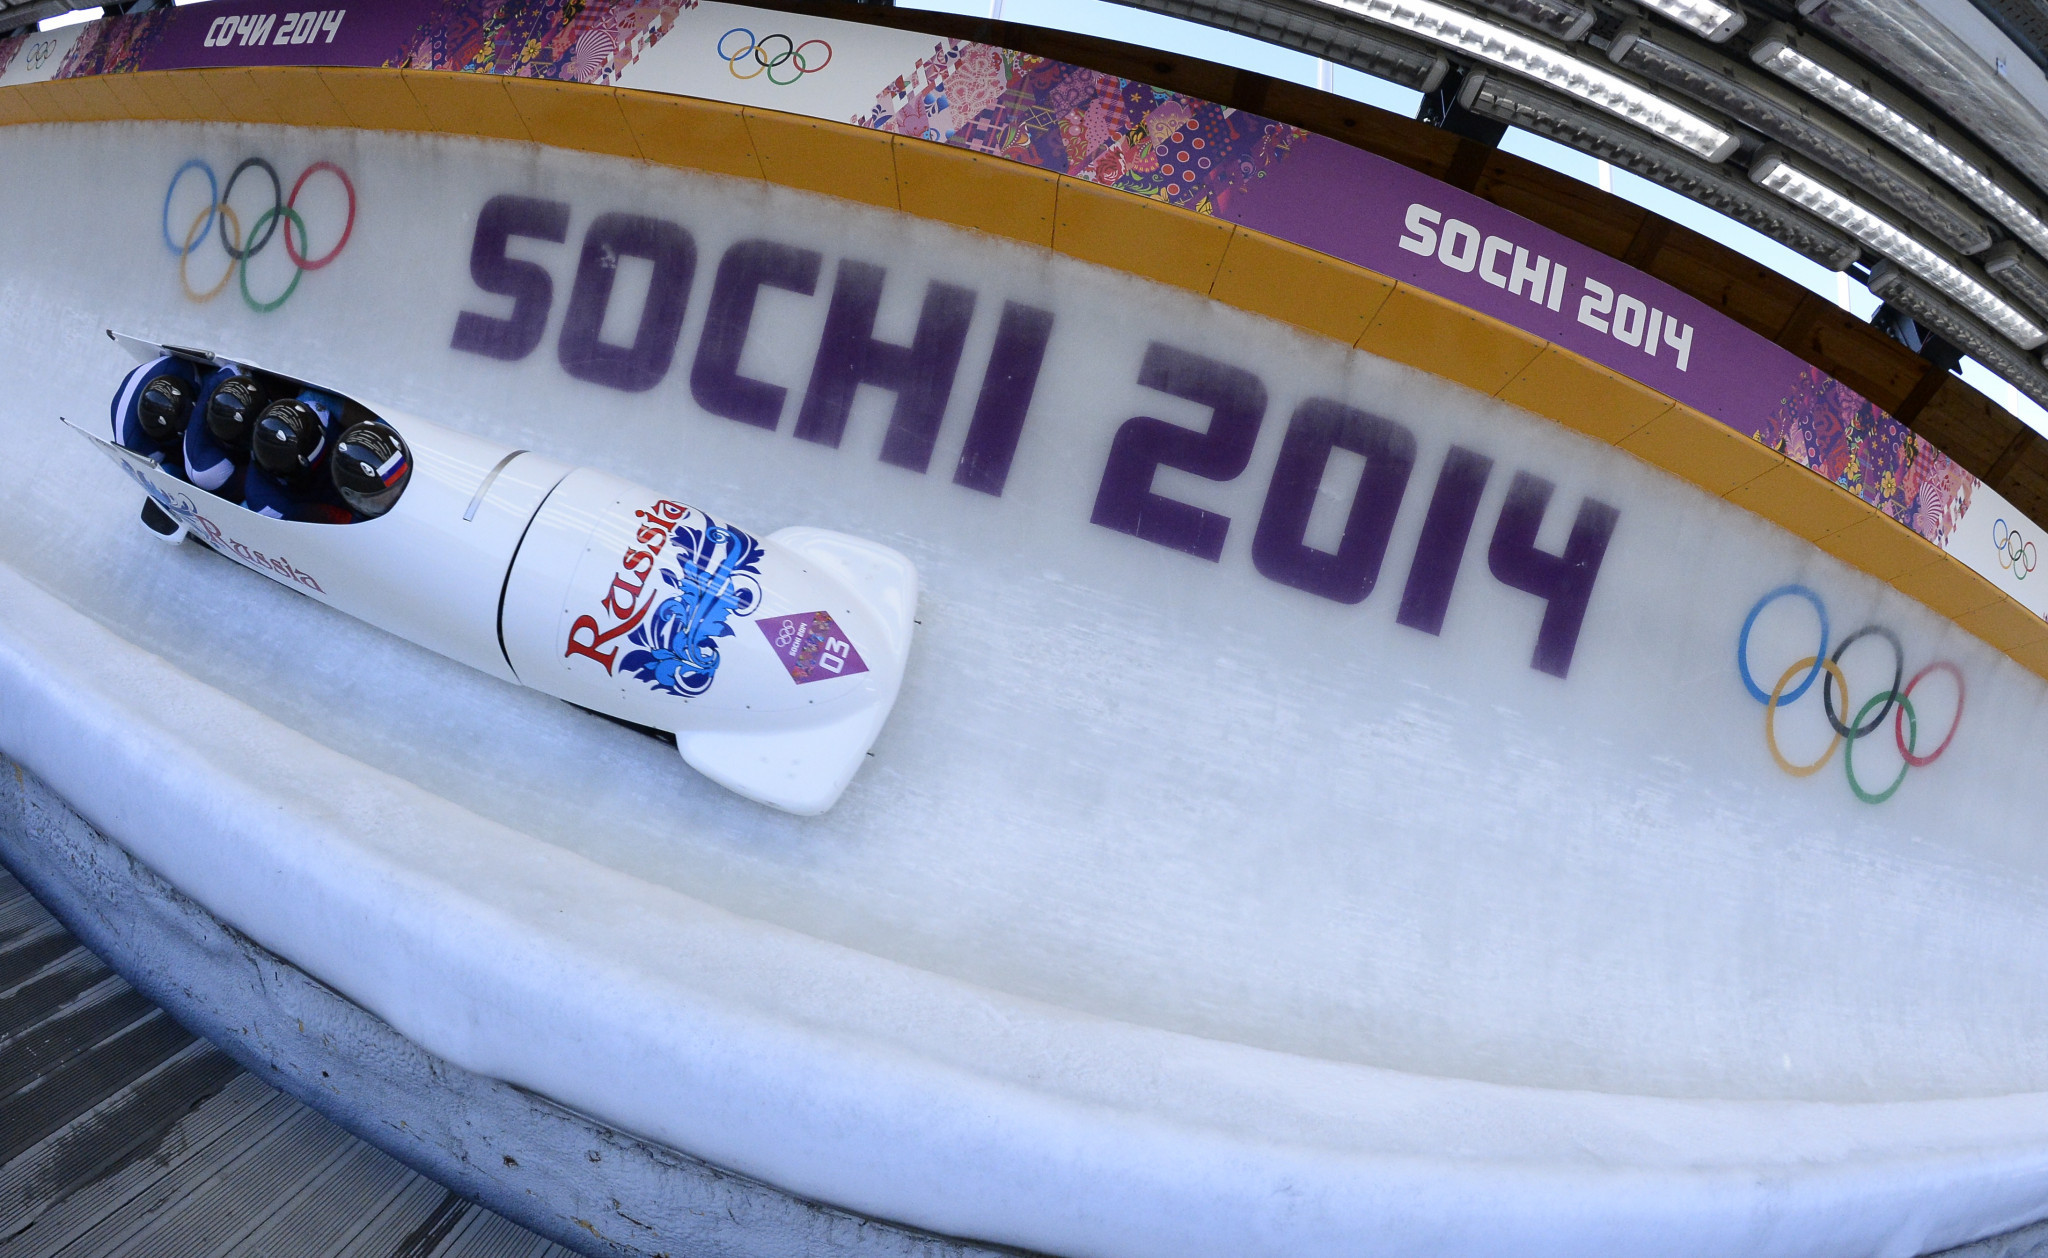 Alexander Zubkov won two gold medals at Sochi 2014 ©Getty Images